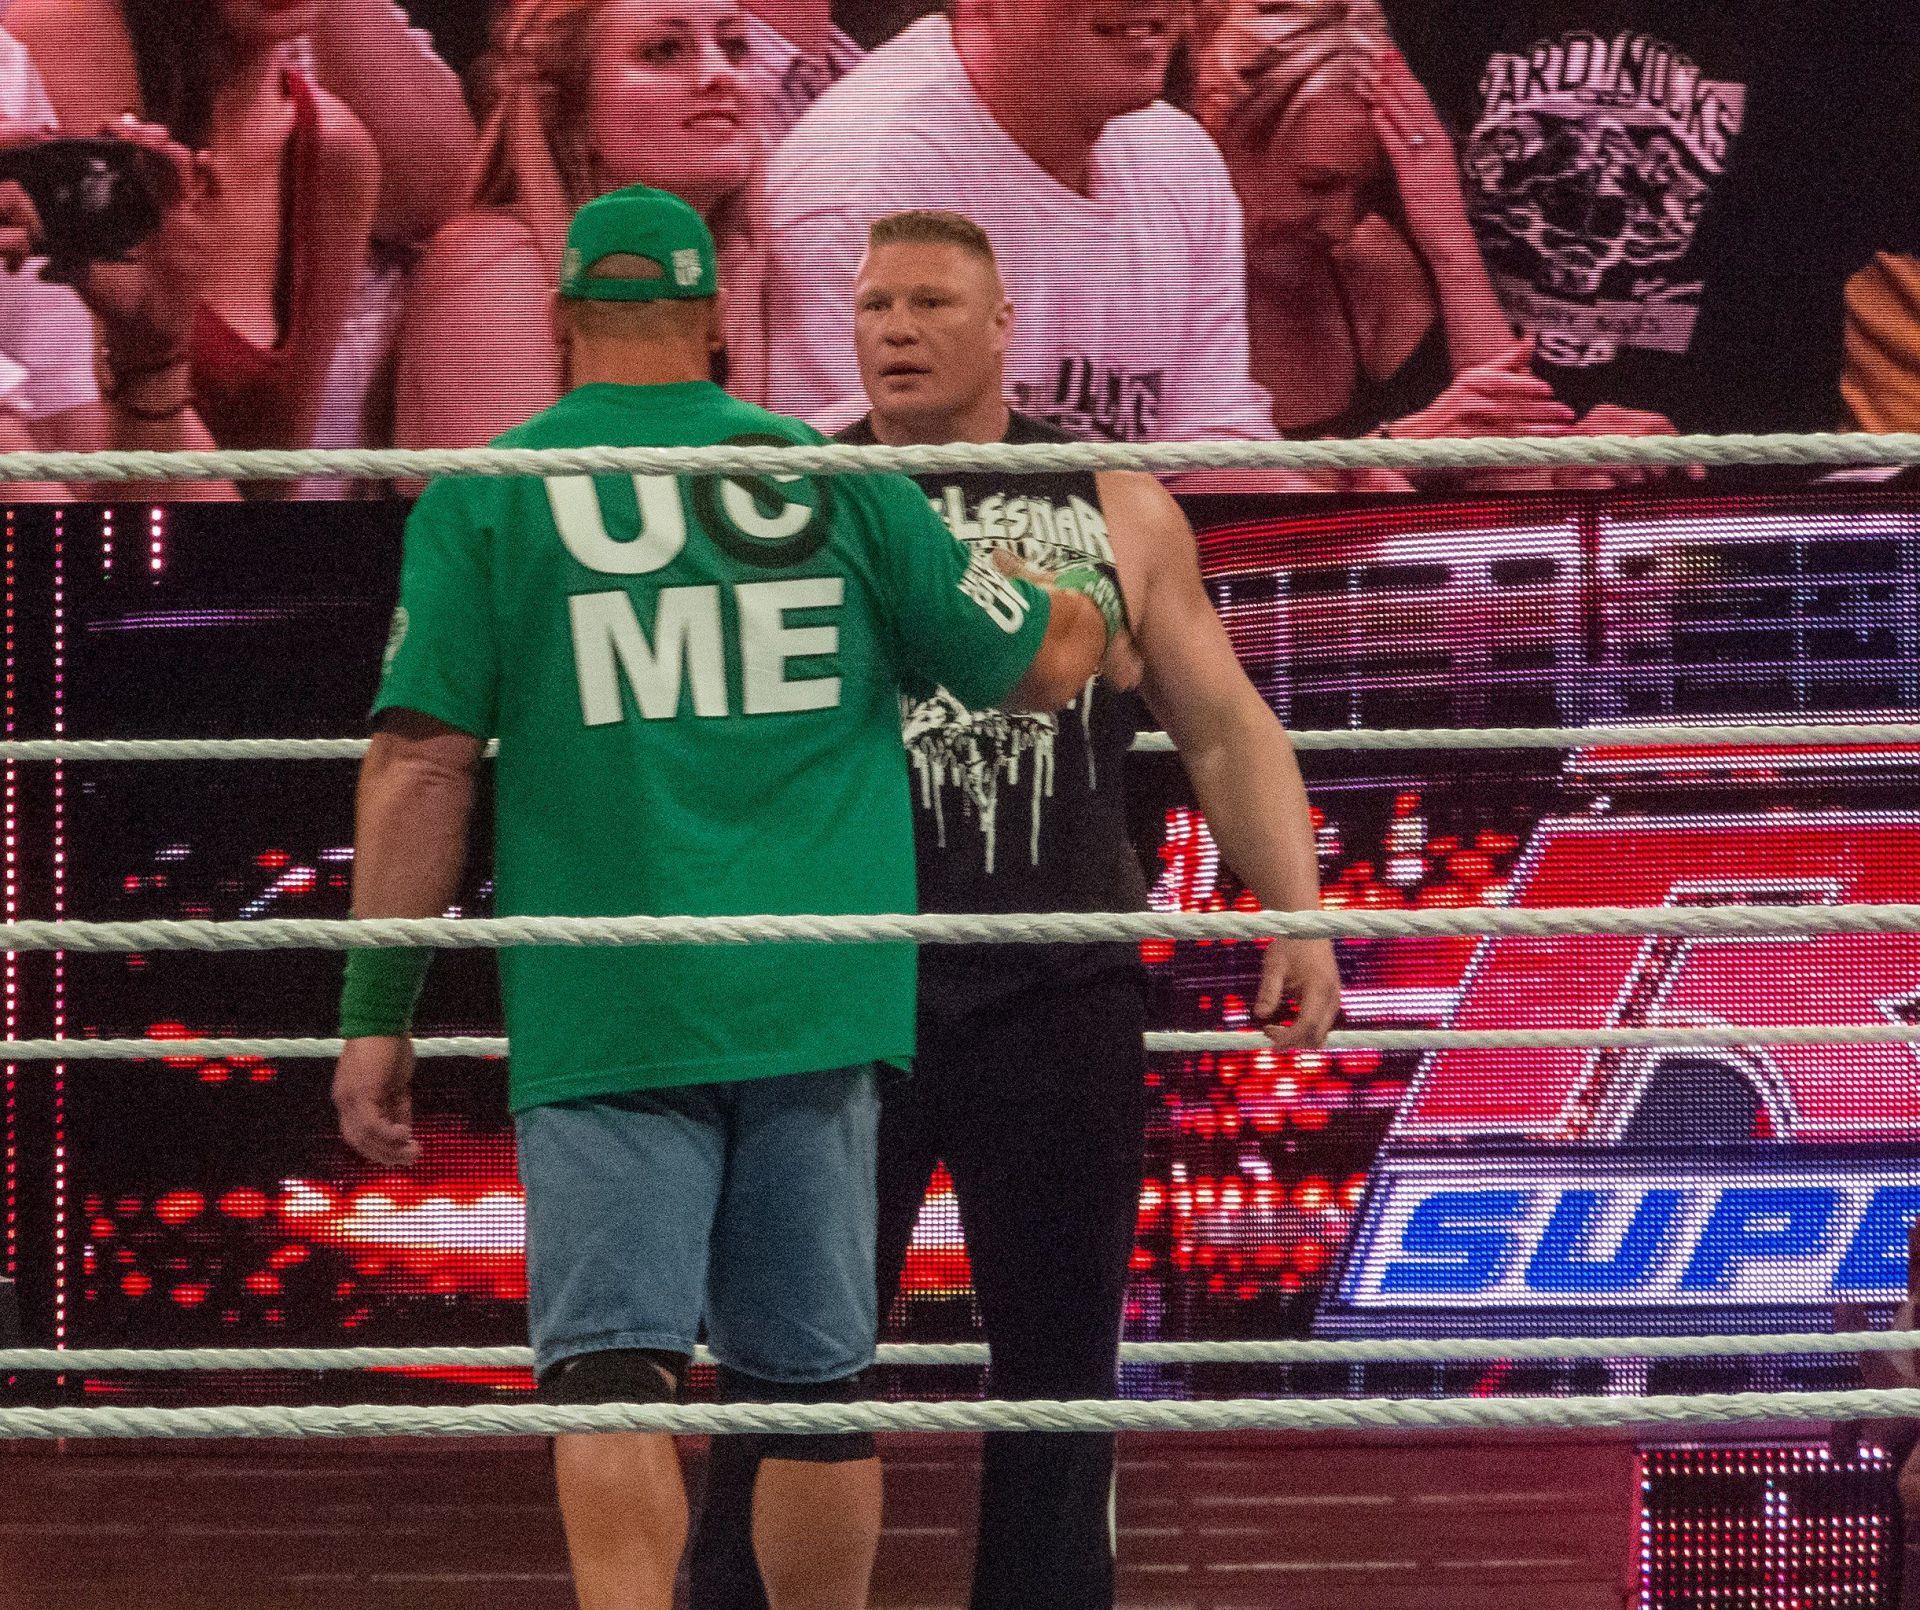 Brock Lesnar did not appreciate getting slapped by John Cena